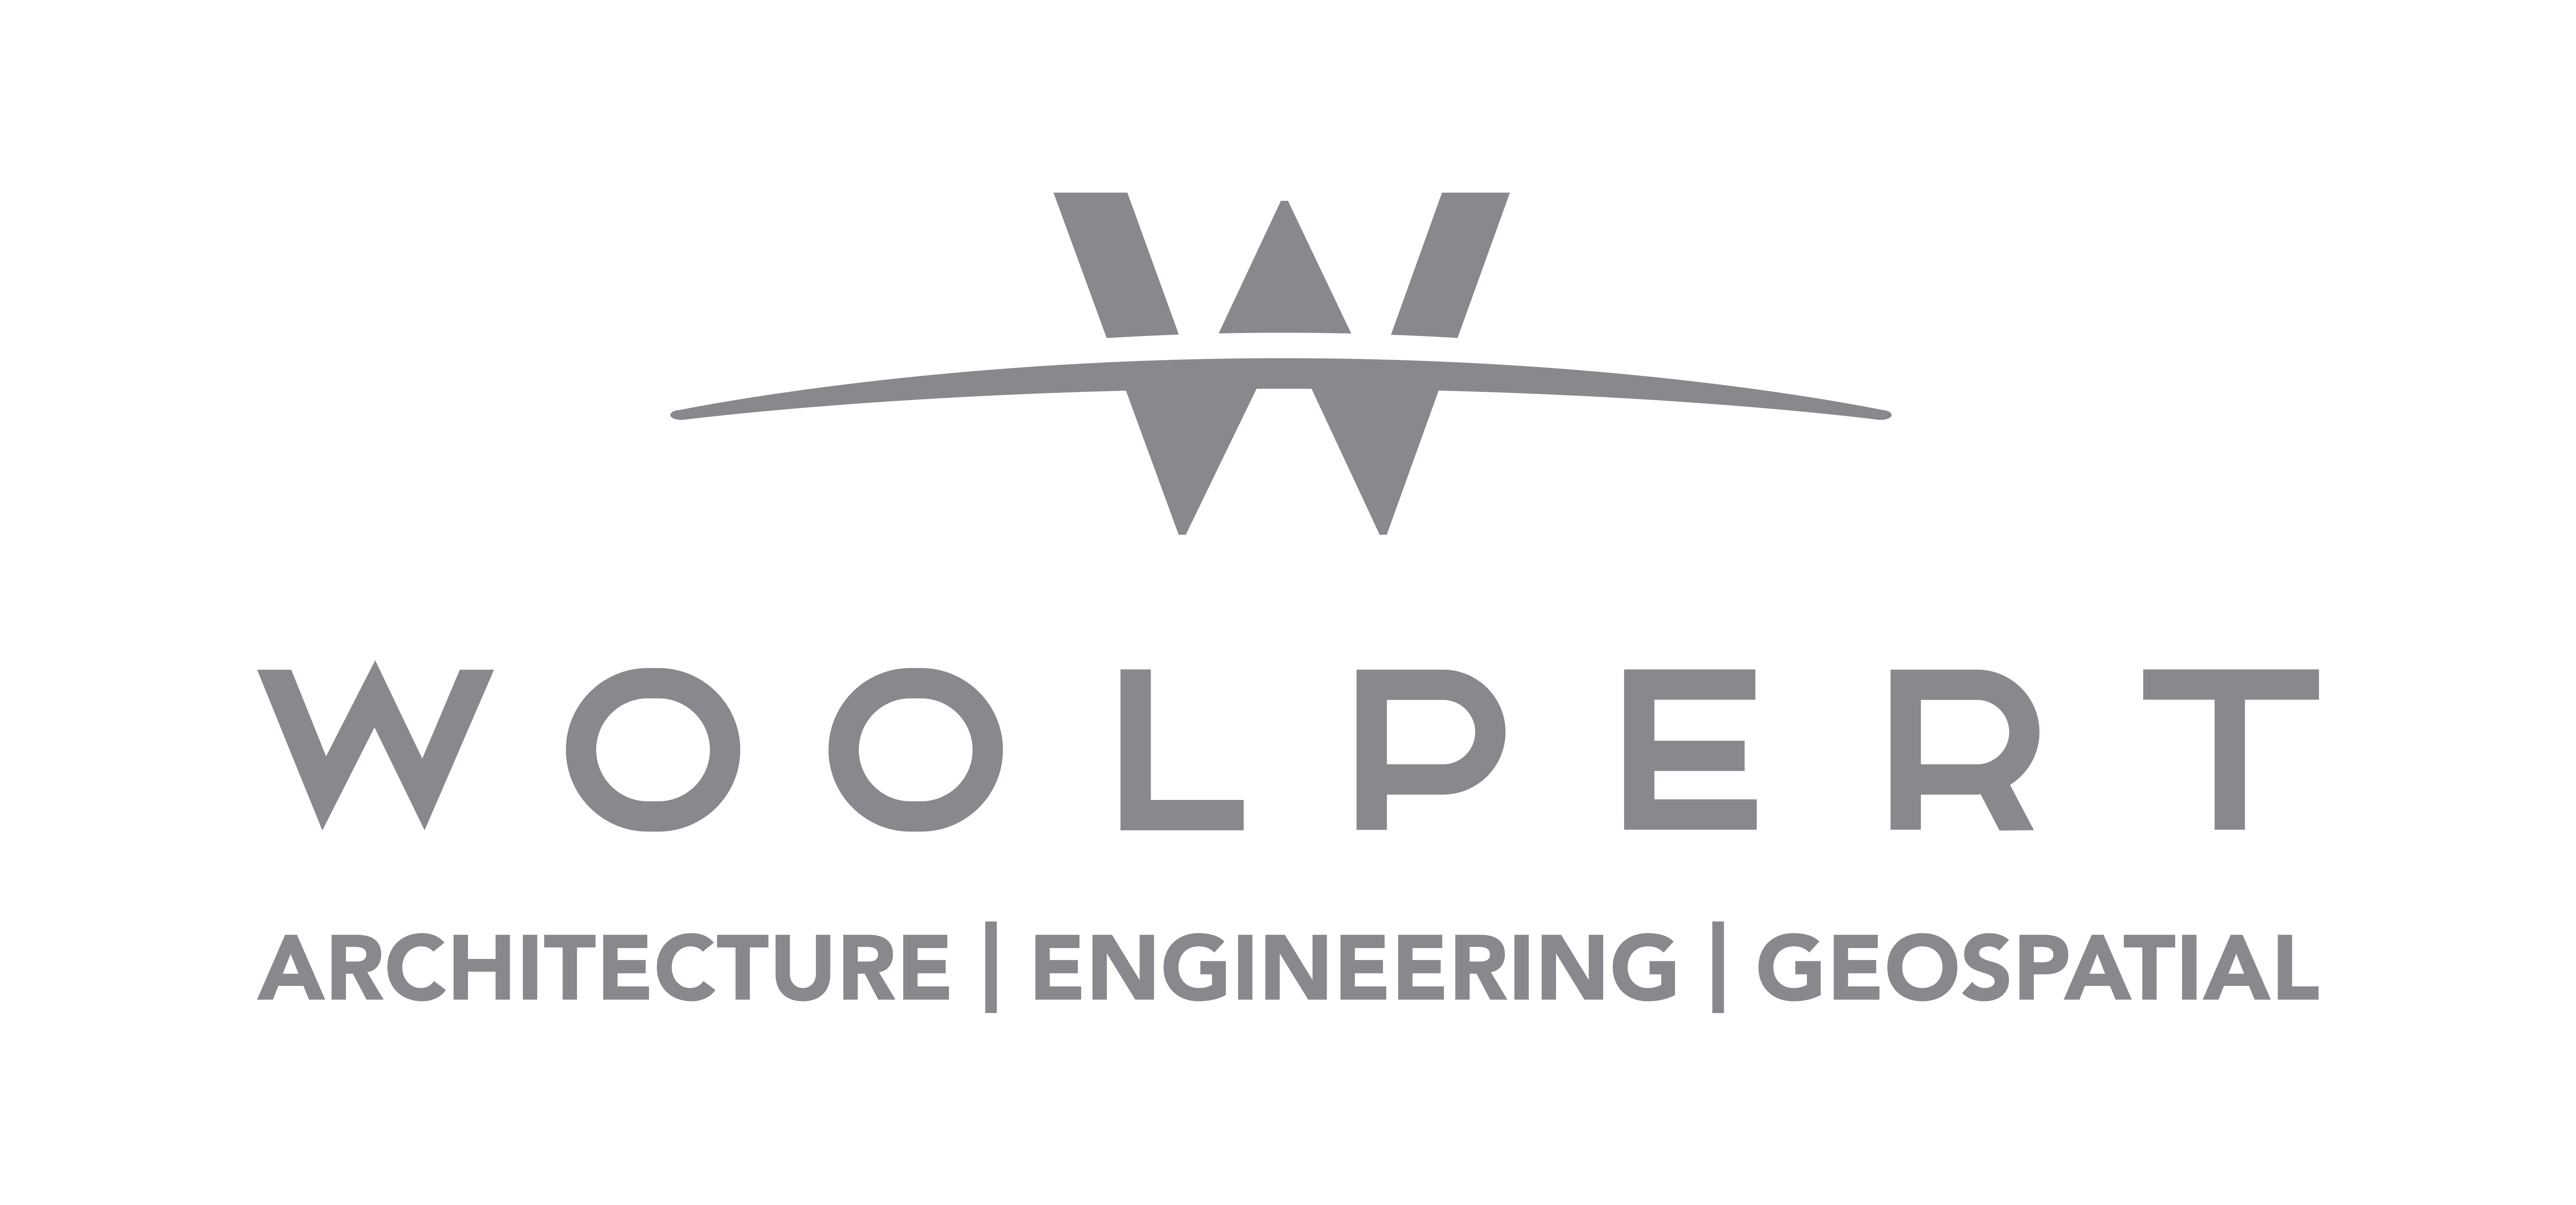 Woolpert logo (2).jpg